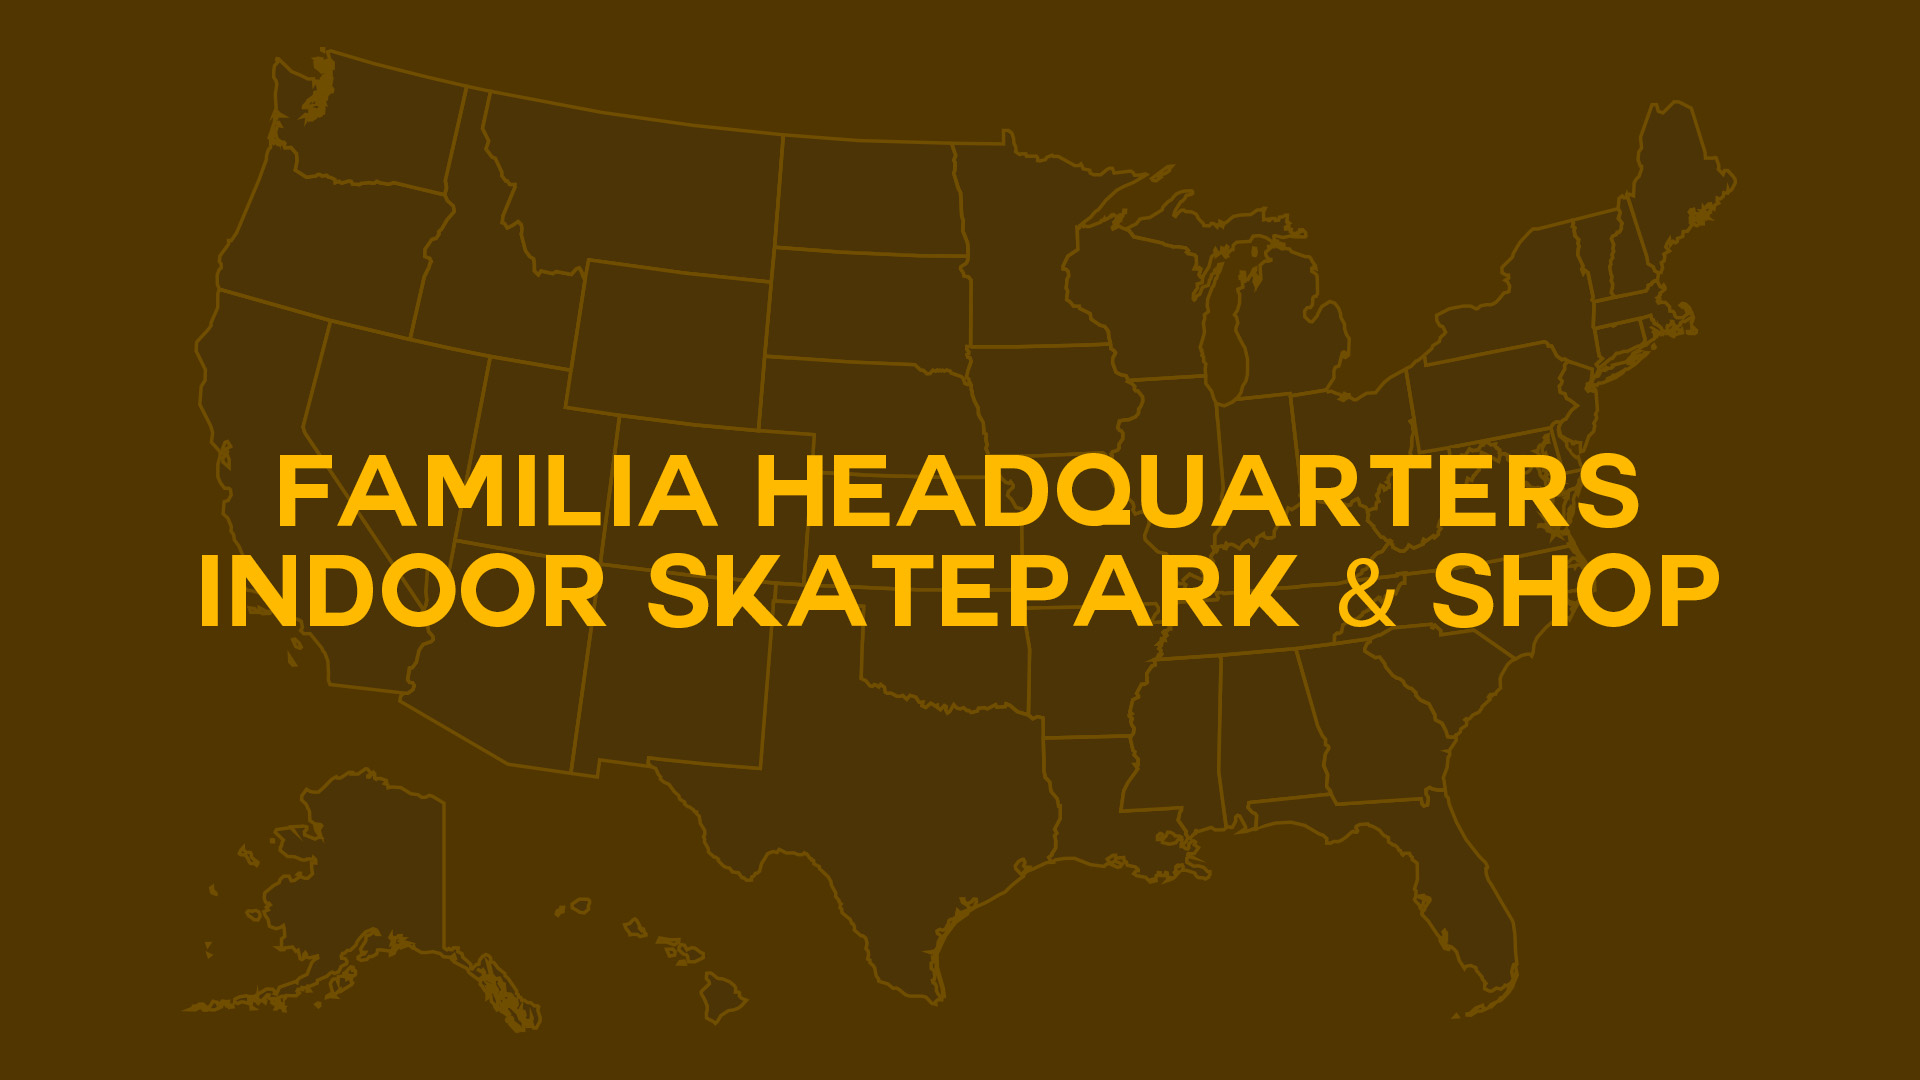 Title card for Familia Headquarters Indoor Skatepark & Shop